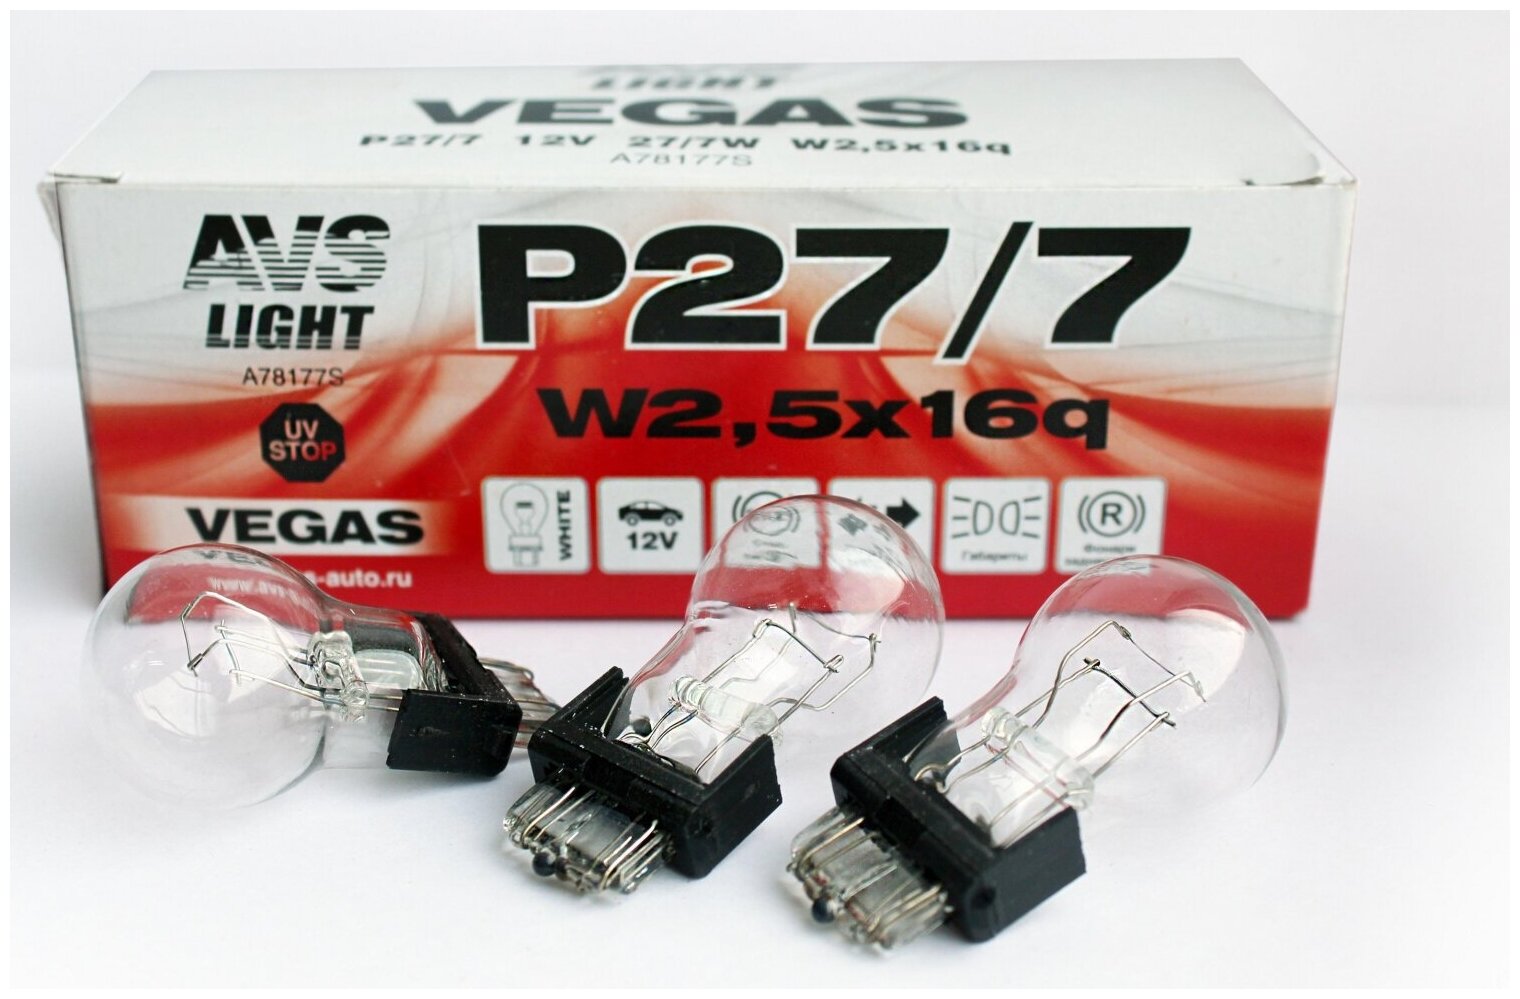 Лампа AVS Vegas 12V. P27/7 (W2,5x16q) BOX (10 шт.)